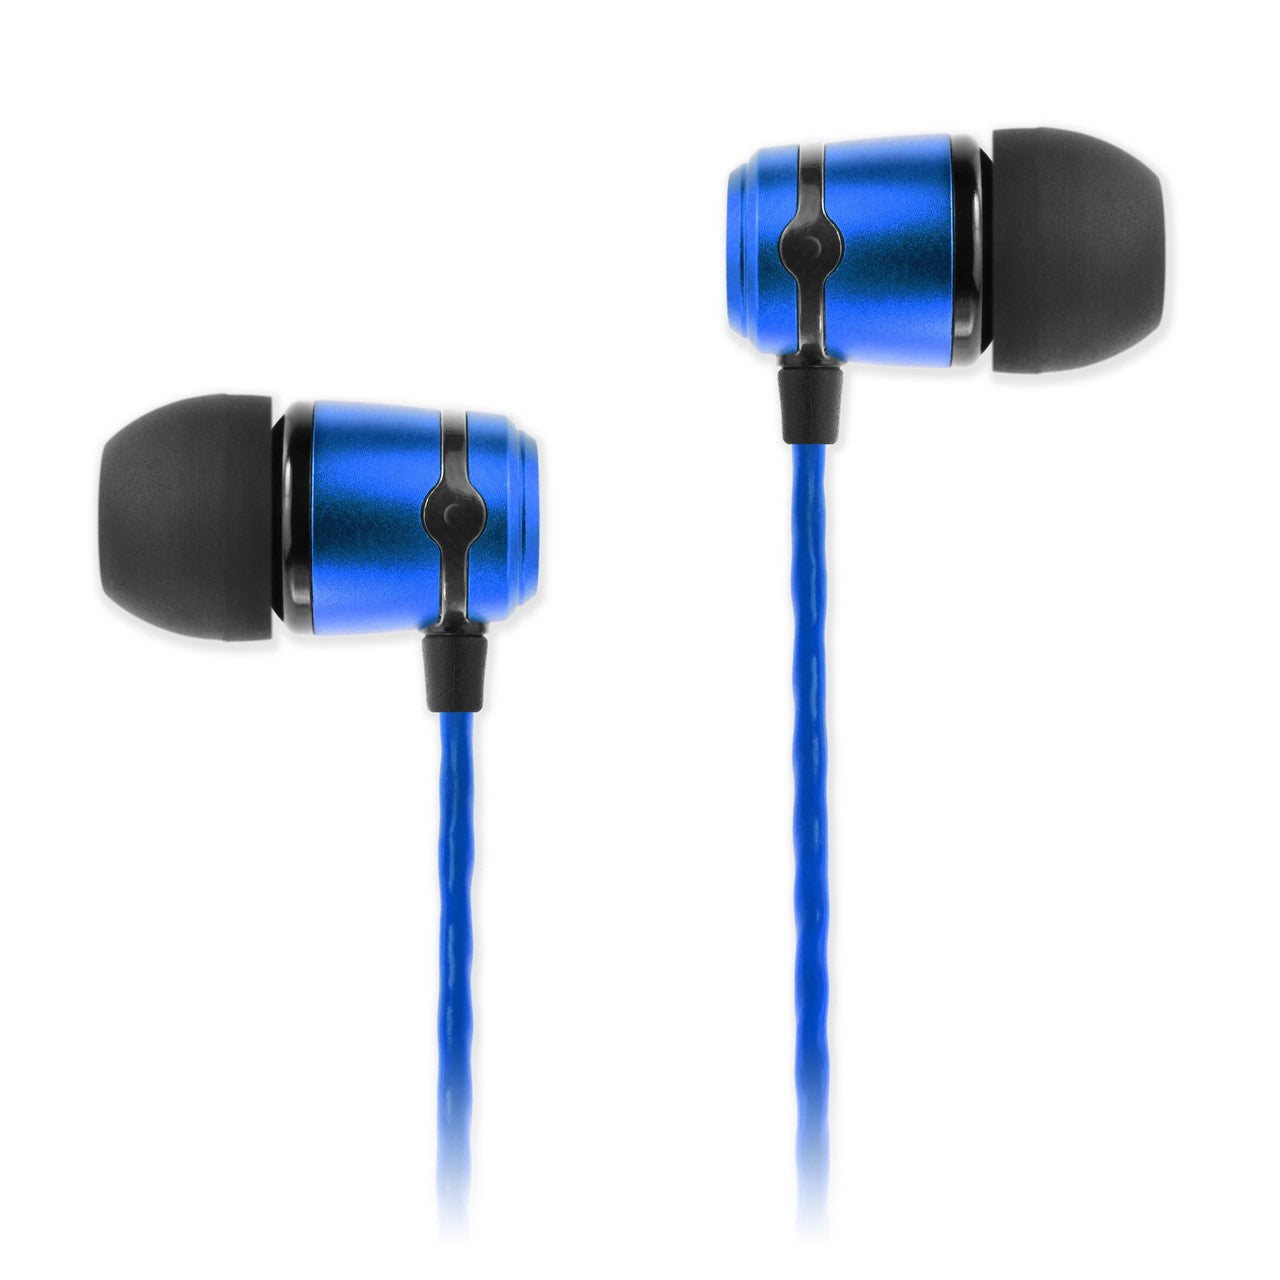 SoundMAGIC E50 In Ear Isolating Earphones - Refurbished